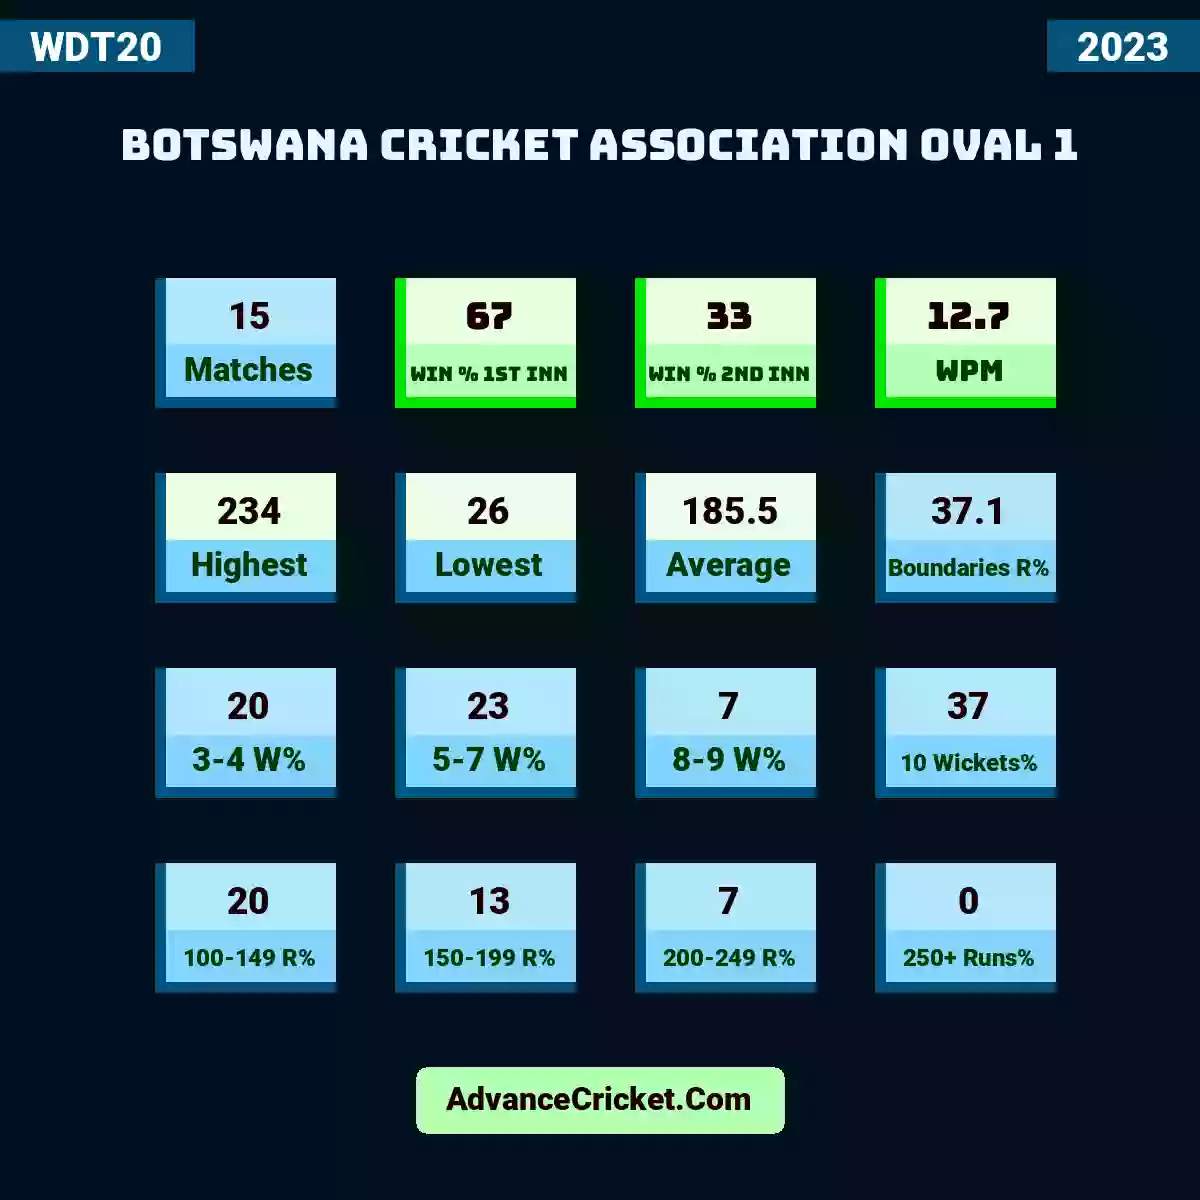 Image showing Botswana Cricket Association Oval 1 with Matches: 15, Win % 1st Inn: 67, Win % 2nd Inn: 33, WPM: 12.7, Highest: 234, Lowest: 26, Average: 185.5, Boundaries R%: 37.1, 3-4 W%: 20, 5-7 W%: 23, 8-9 W%: 7, 10 Wickets%: 37, 100-149 R%: 20, 150-199 R%: 13, 200-249 R%: 7, 250+ Runs%: 0.